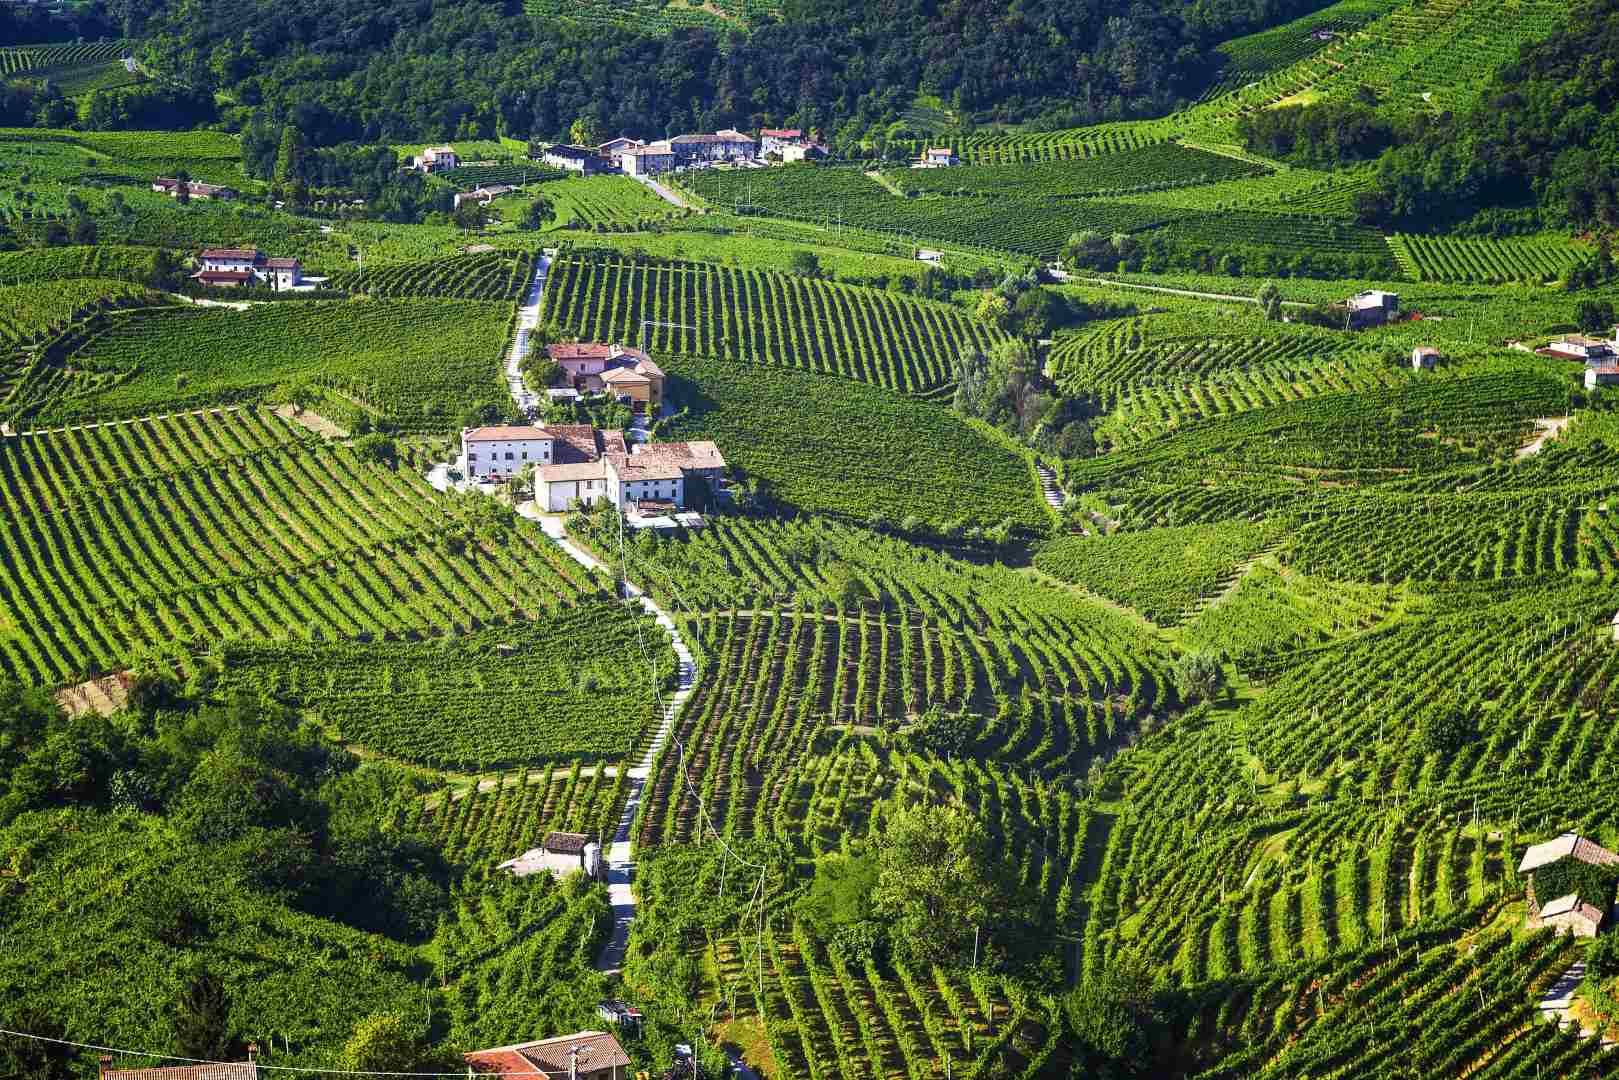 Landschaft in Norditalien mit grünen Feldern